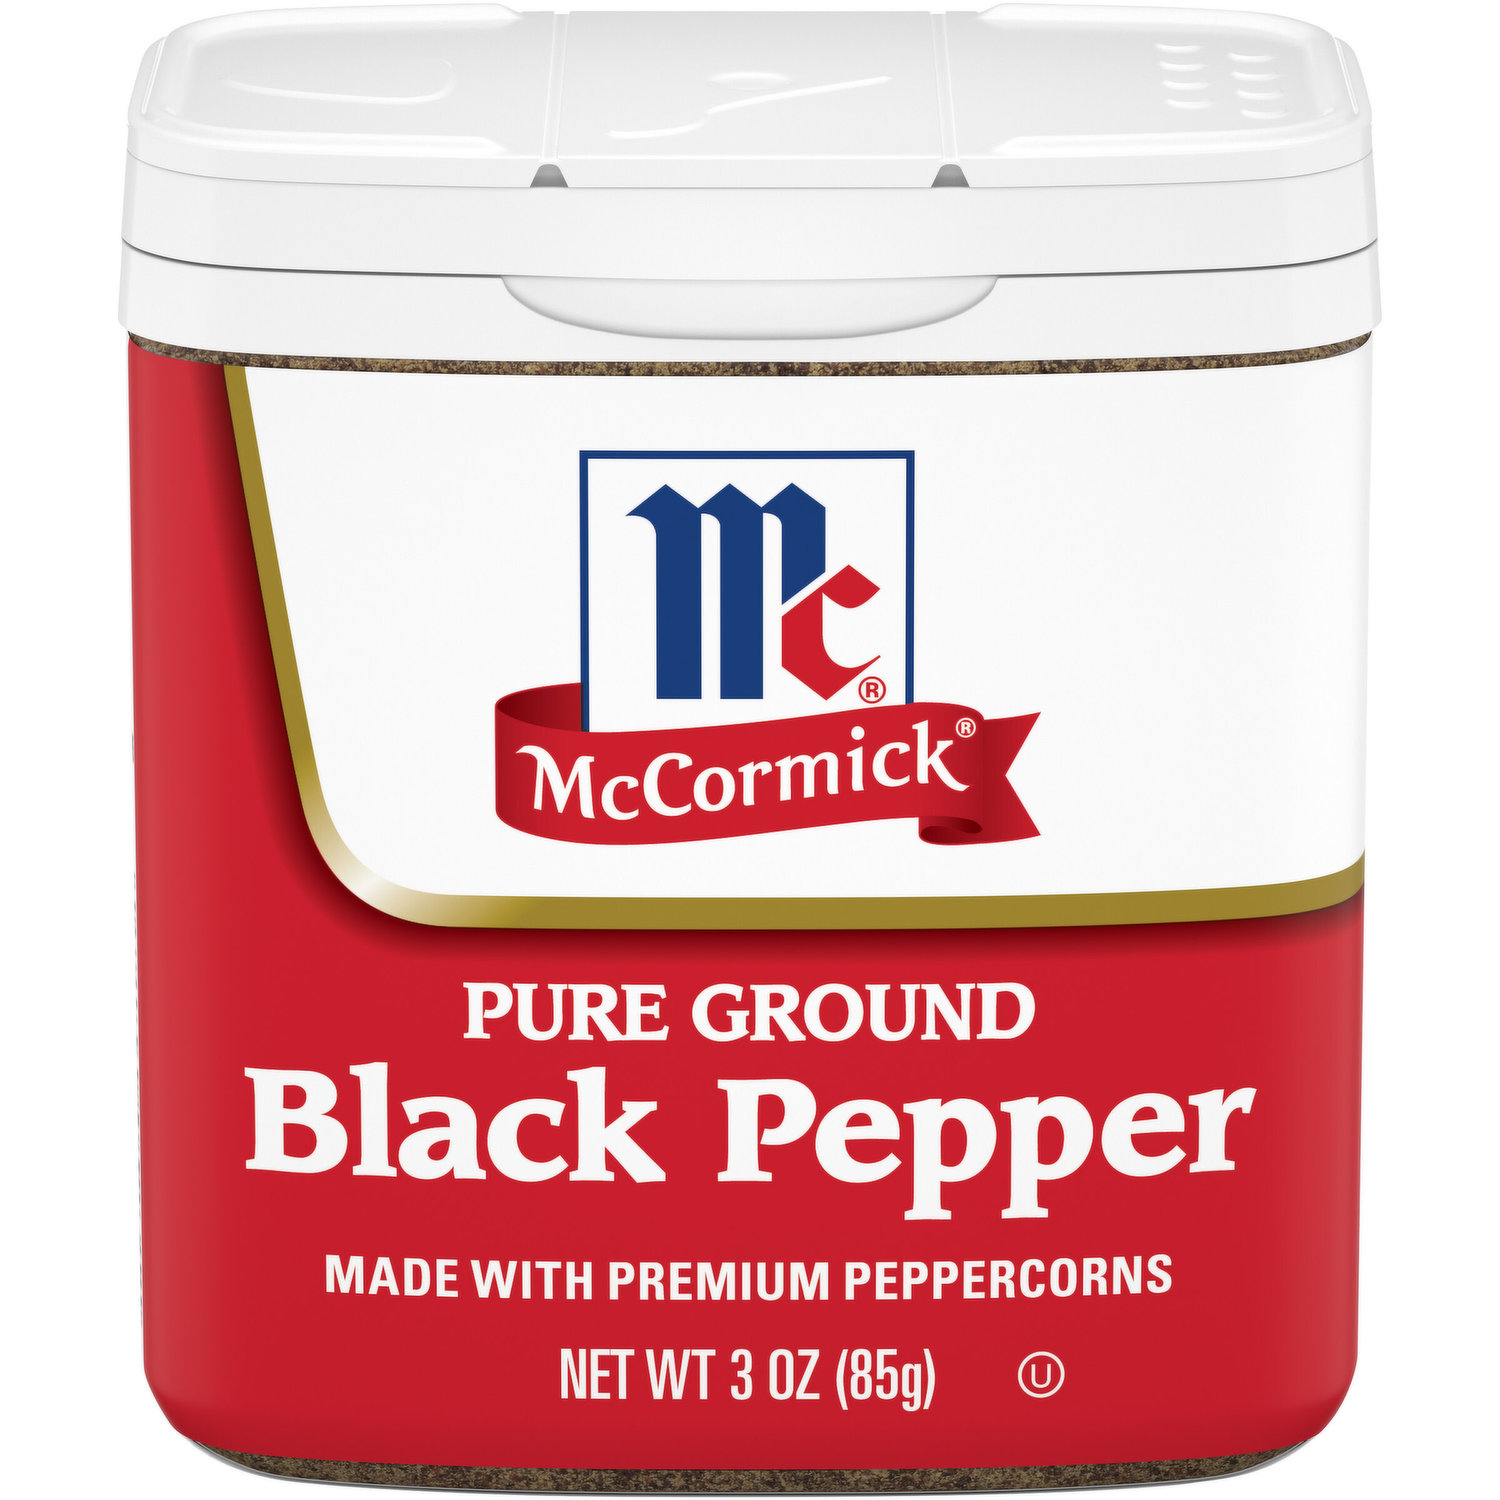  McCormick Premium Black & White Peppercorn Grinder